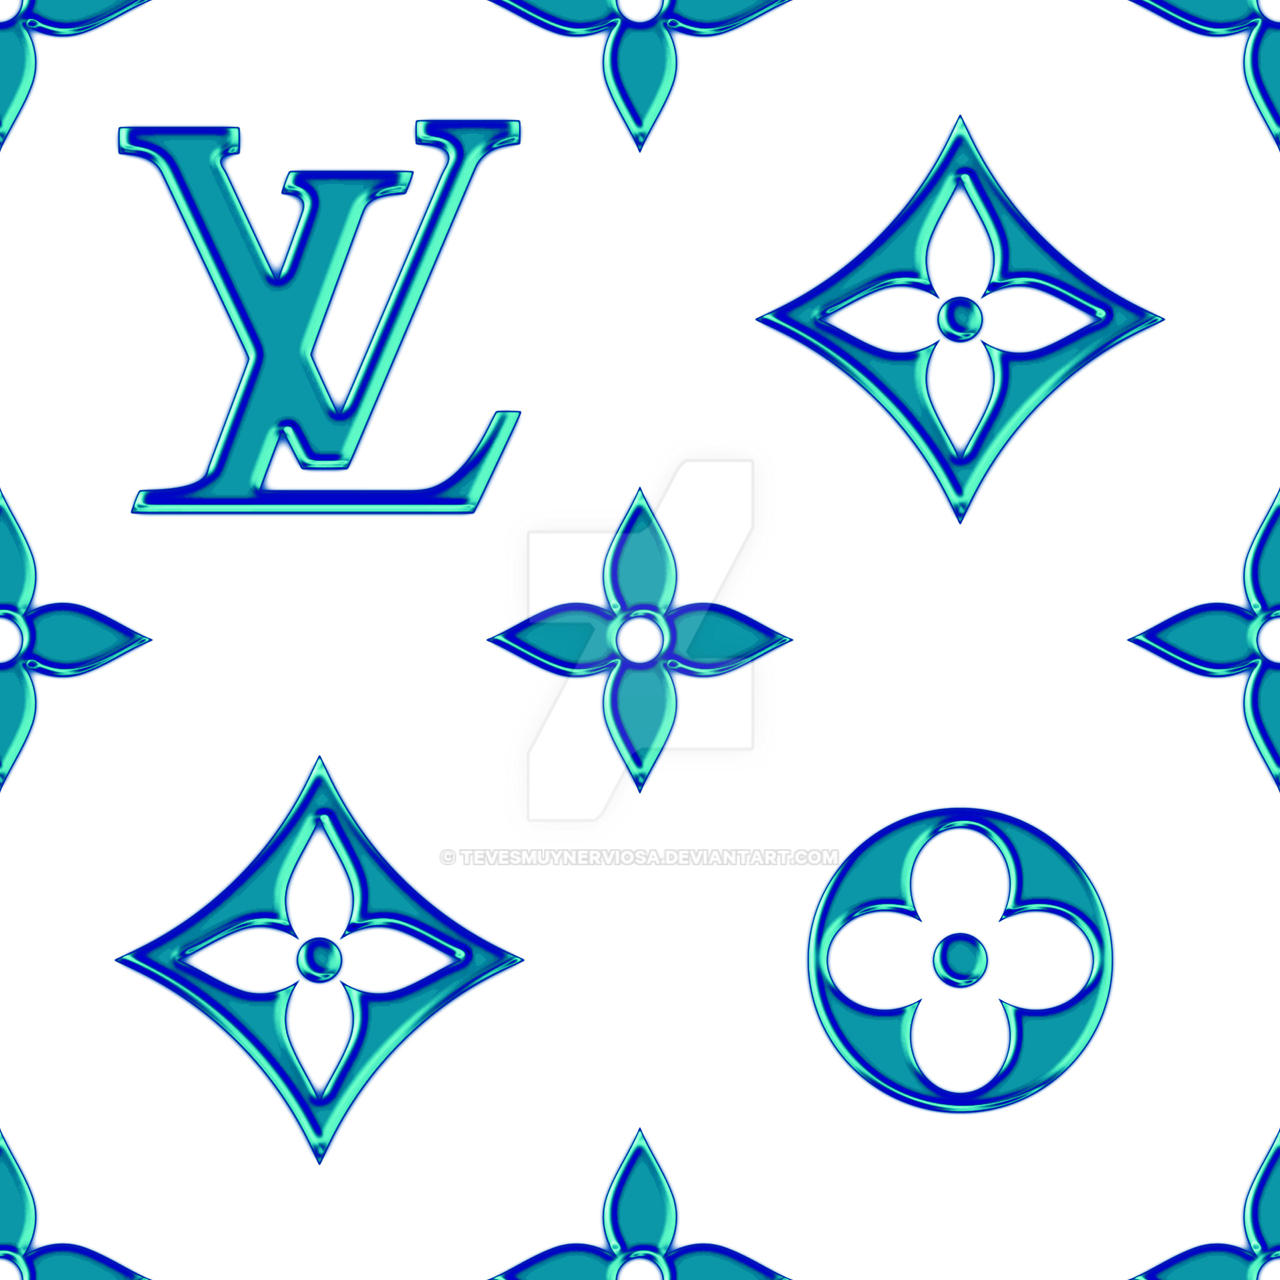 LV Logo pattern by Jon--s on DeviantArt